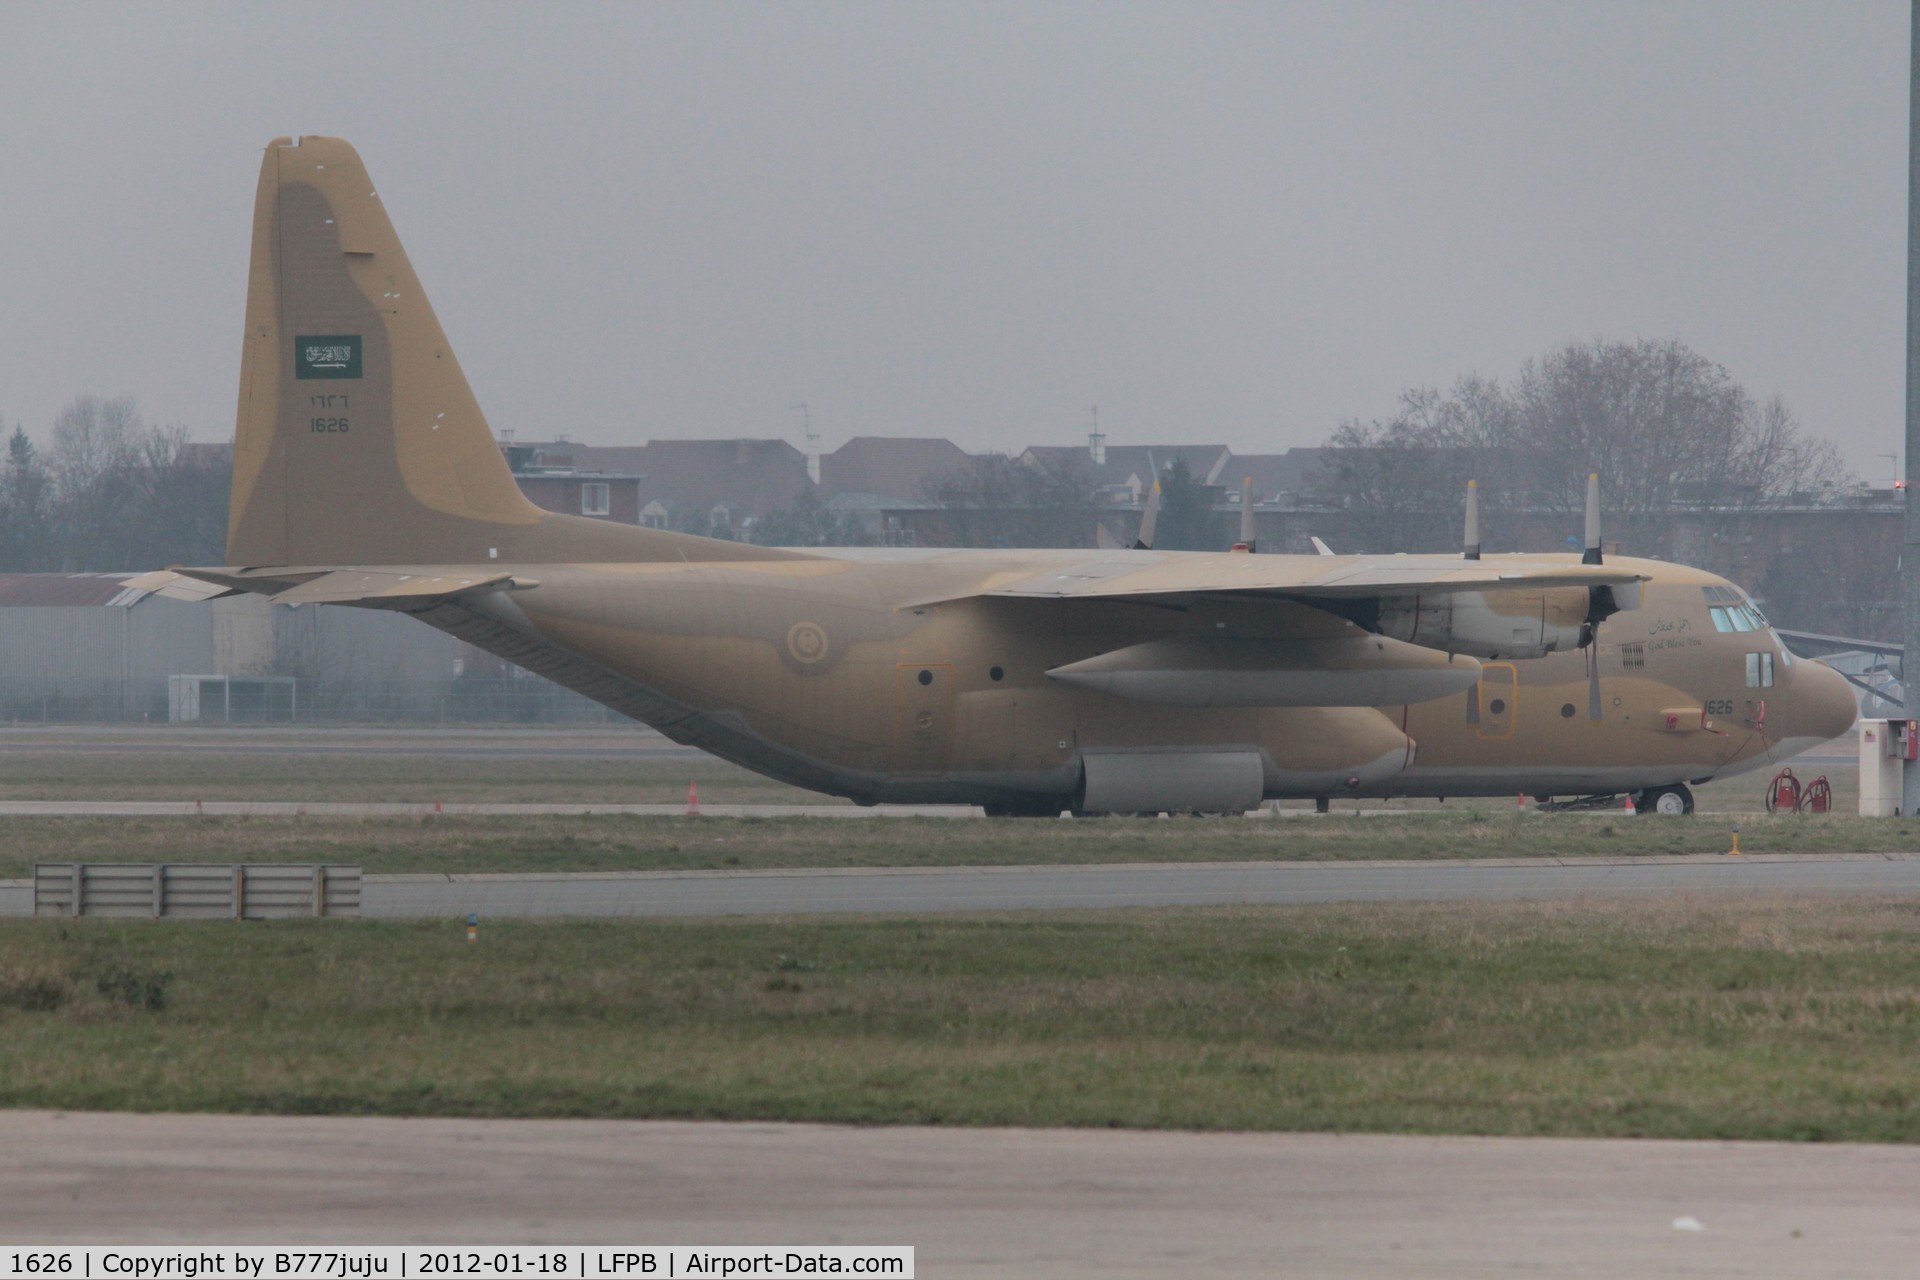 1626, 1988 Lockheed C-130H Hercules C/N 382-5270, on transit at Le Bourget